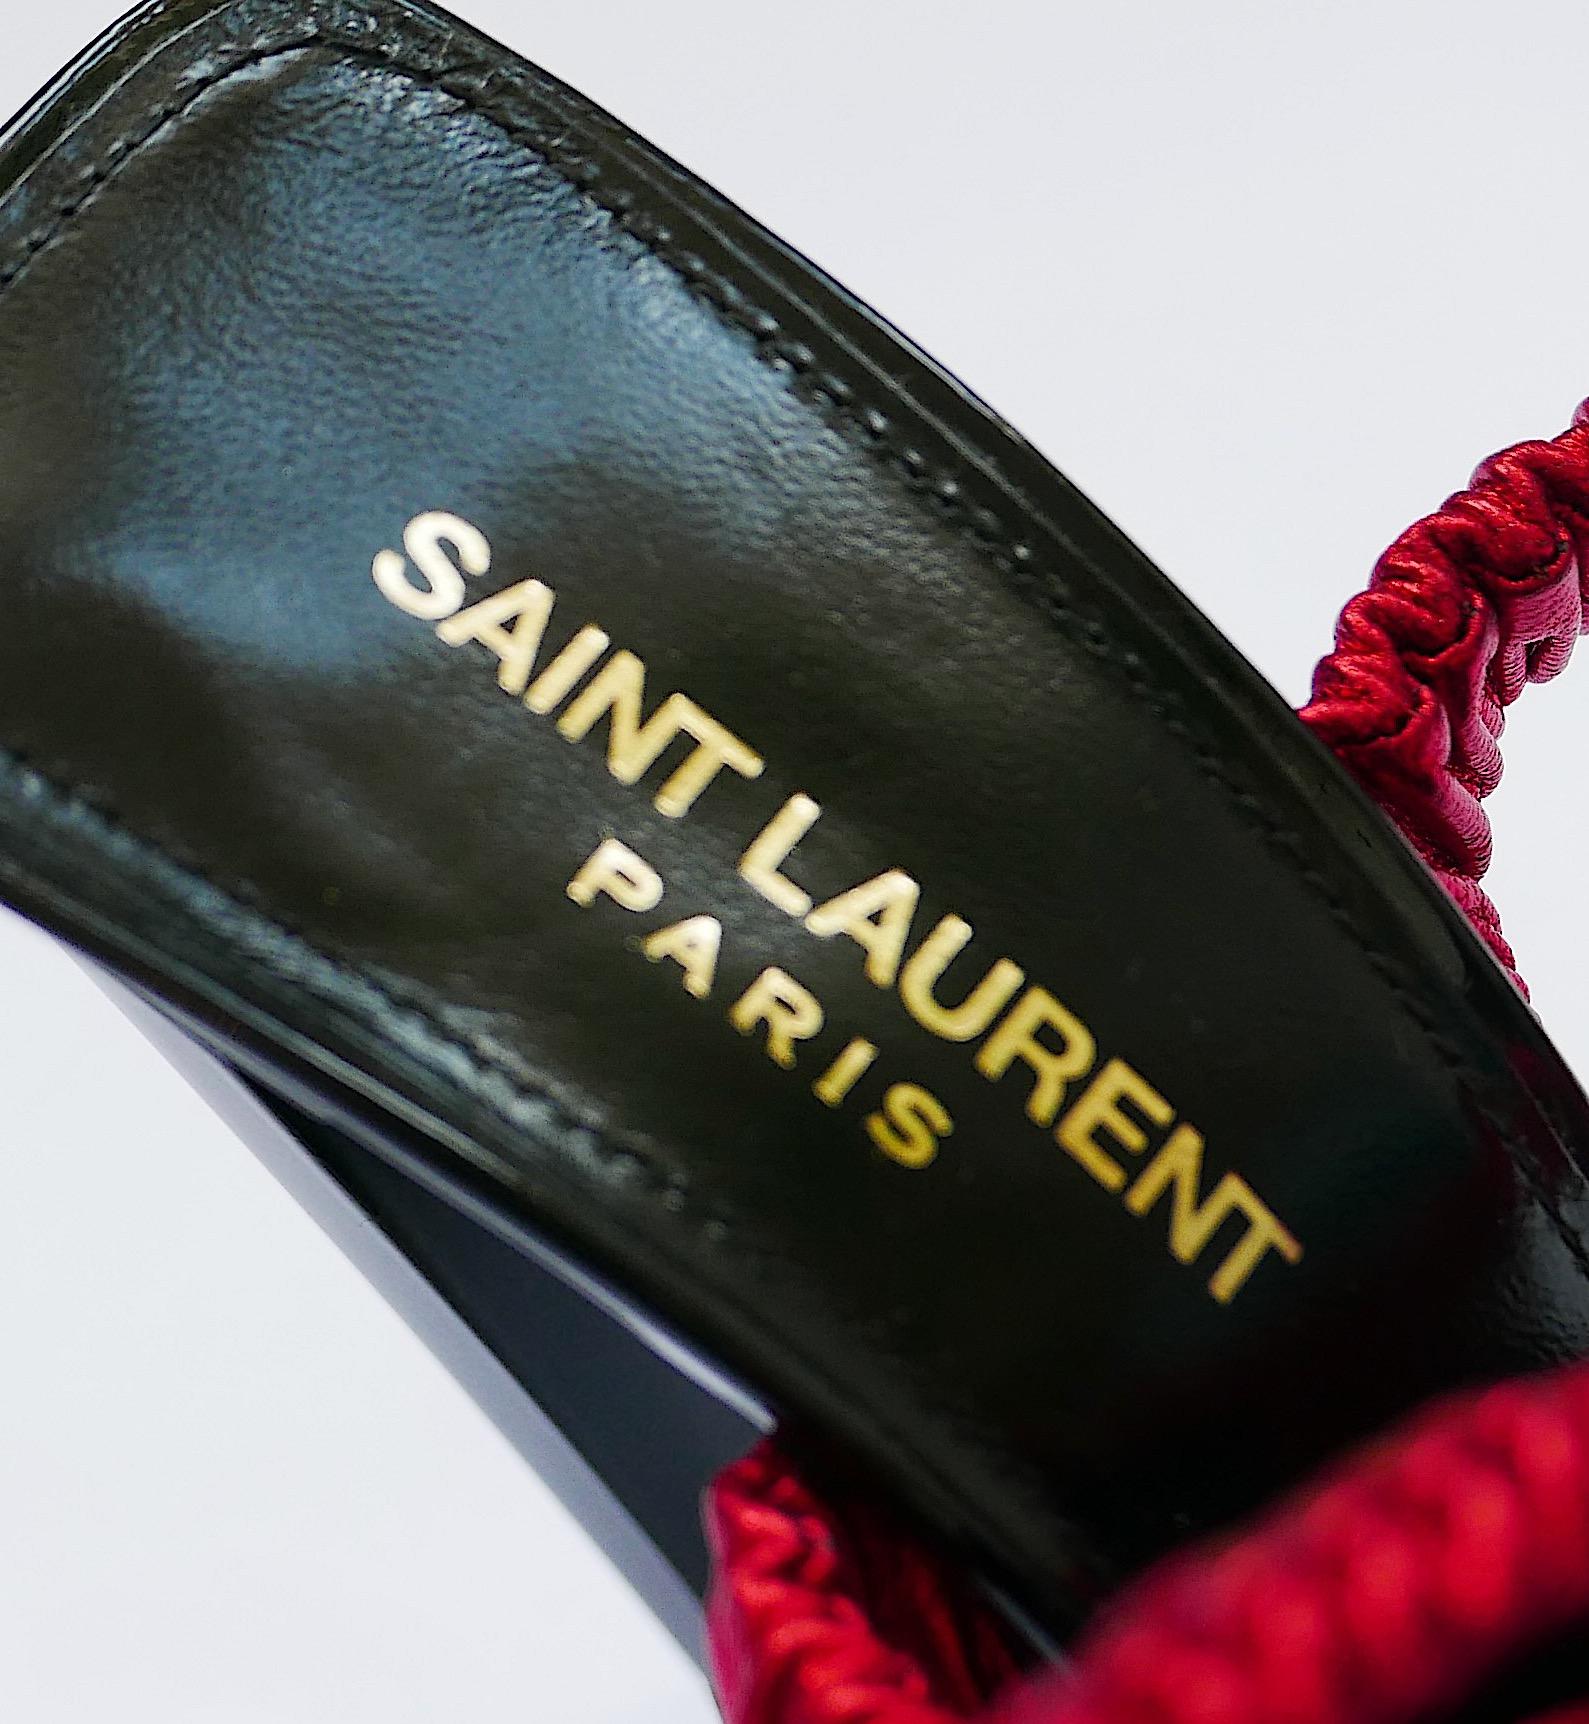 Saint Laurent Freja Rose 105 Heels Fall 2017 For Sale 2